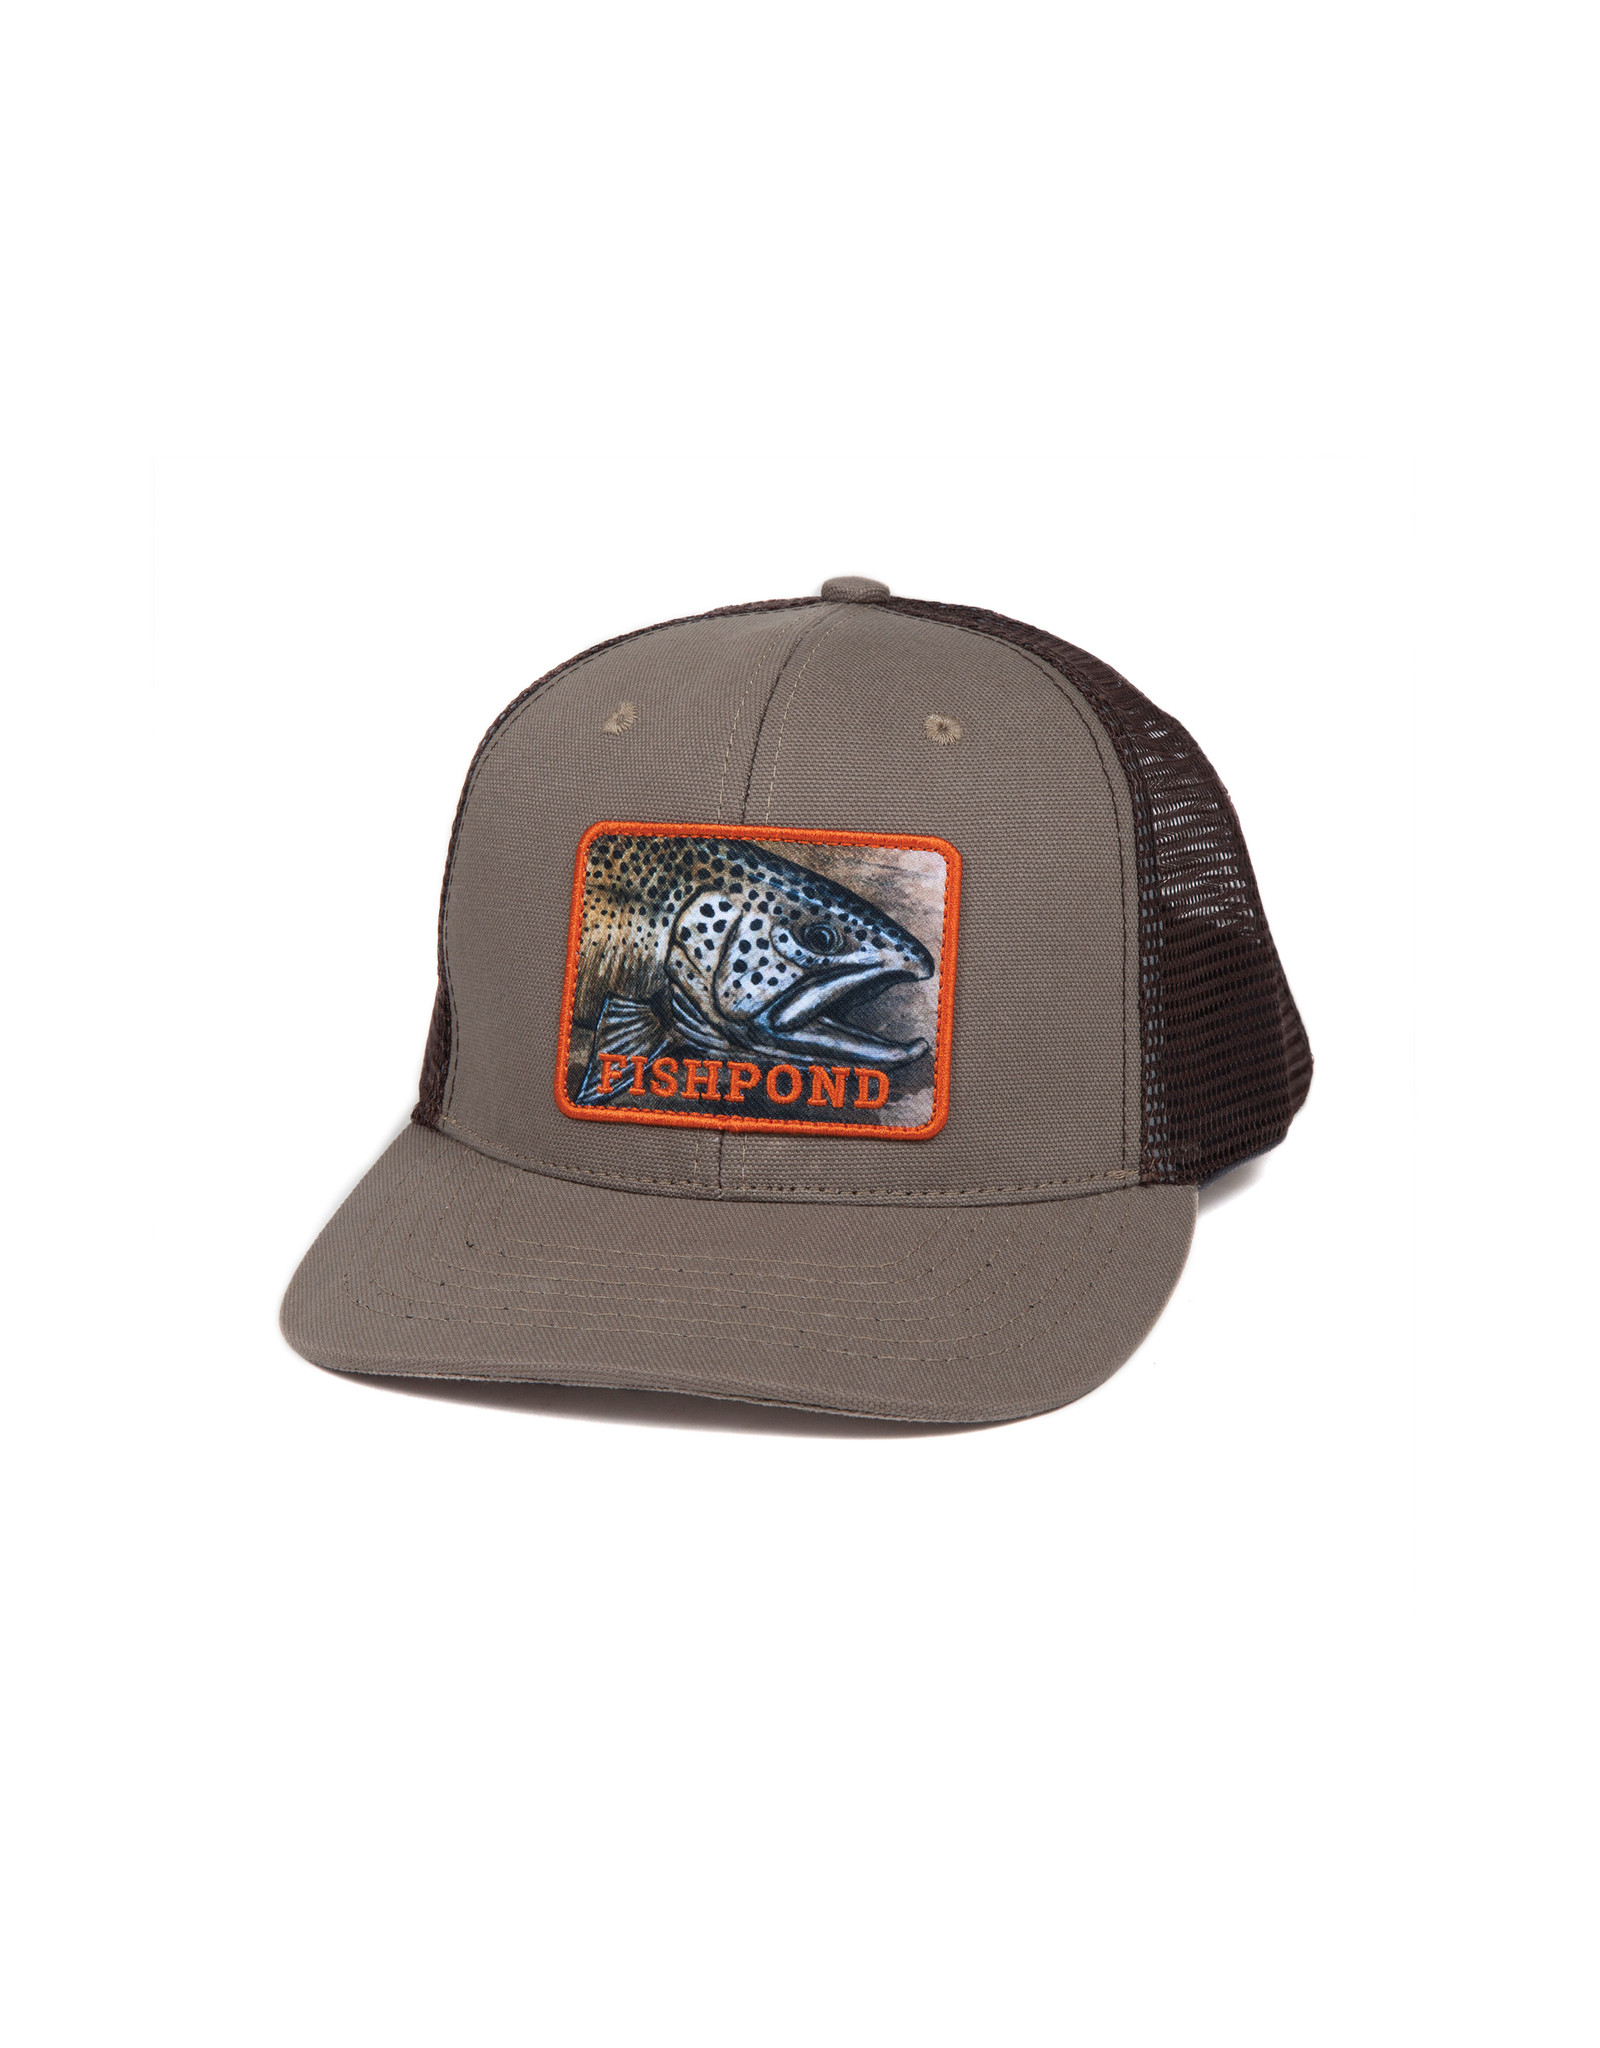 Fishpond SLAB TRUCKER HAT - SANDSTONE/BROWN